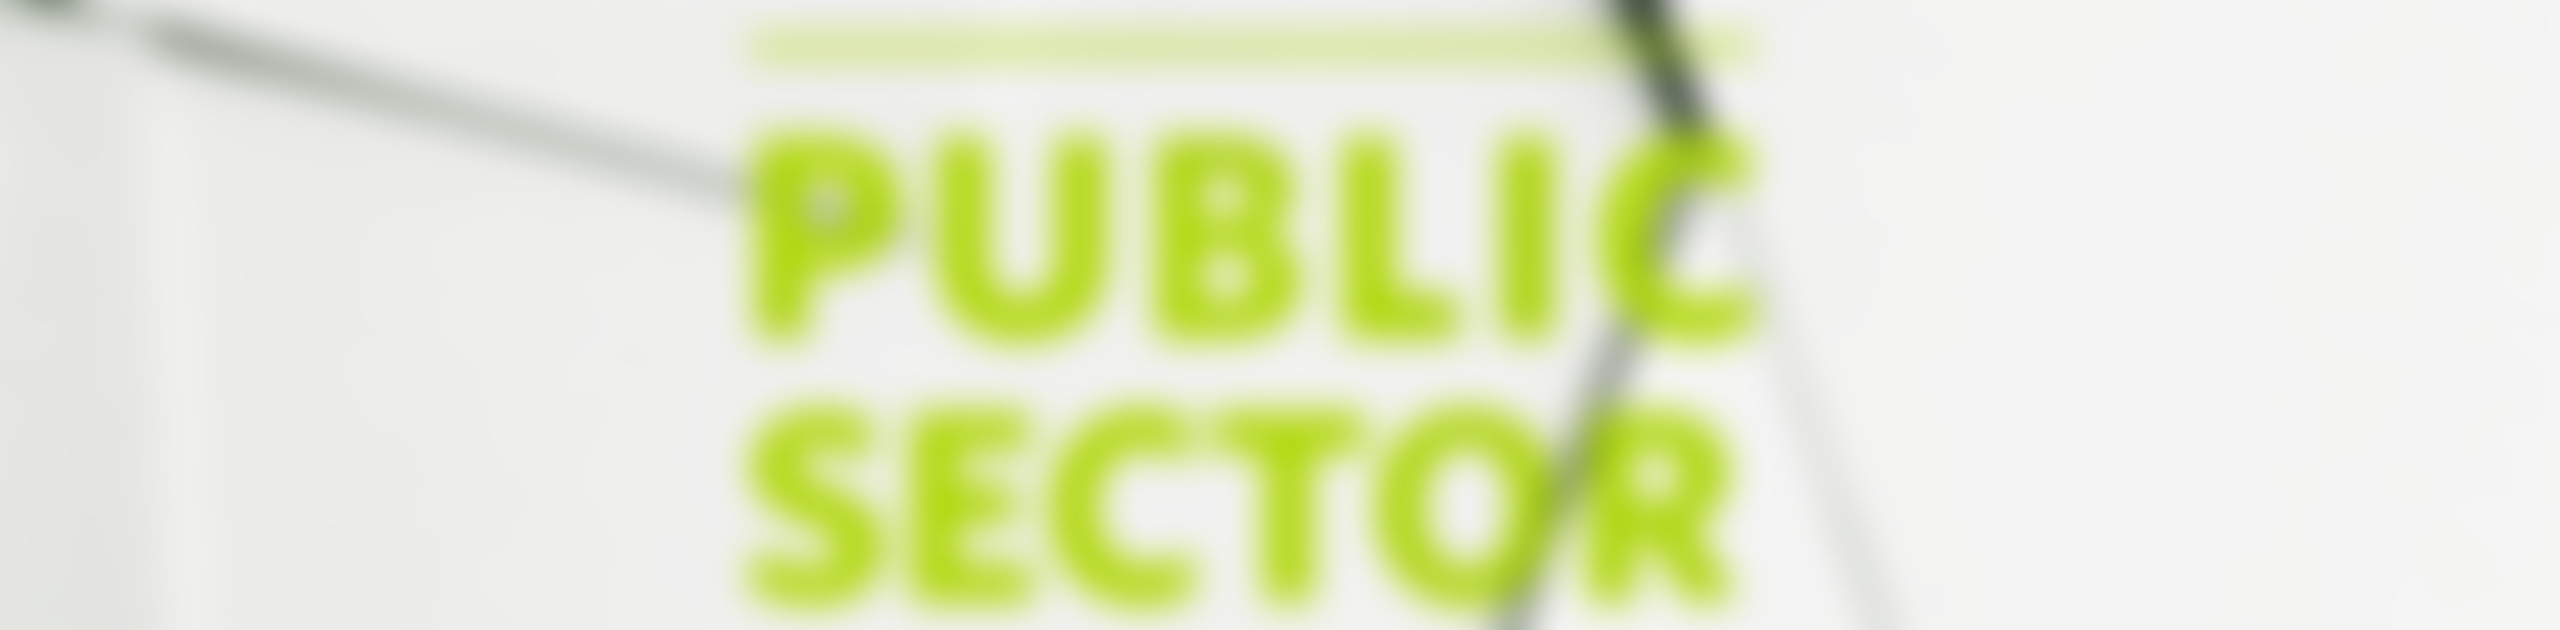 『Service Design Impact Report : Public Sector Digest (jp)』日本語ダイジェスト版